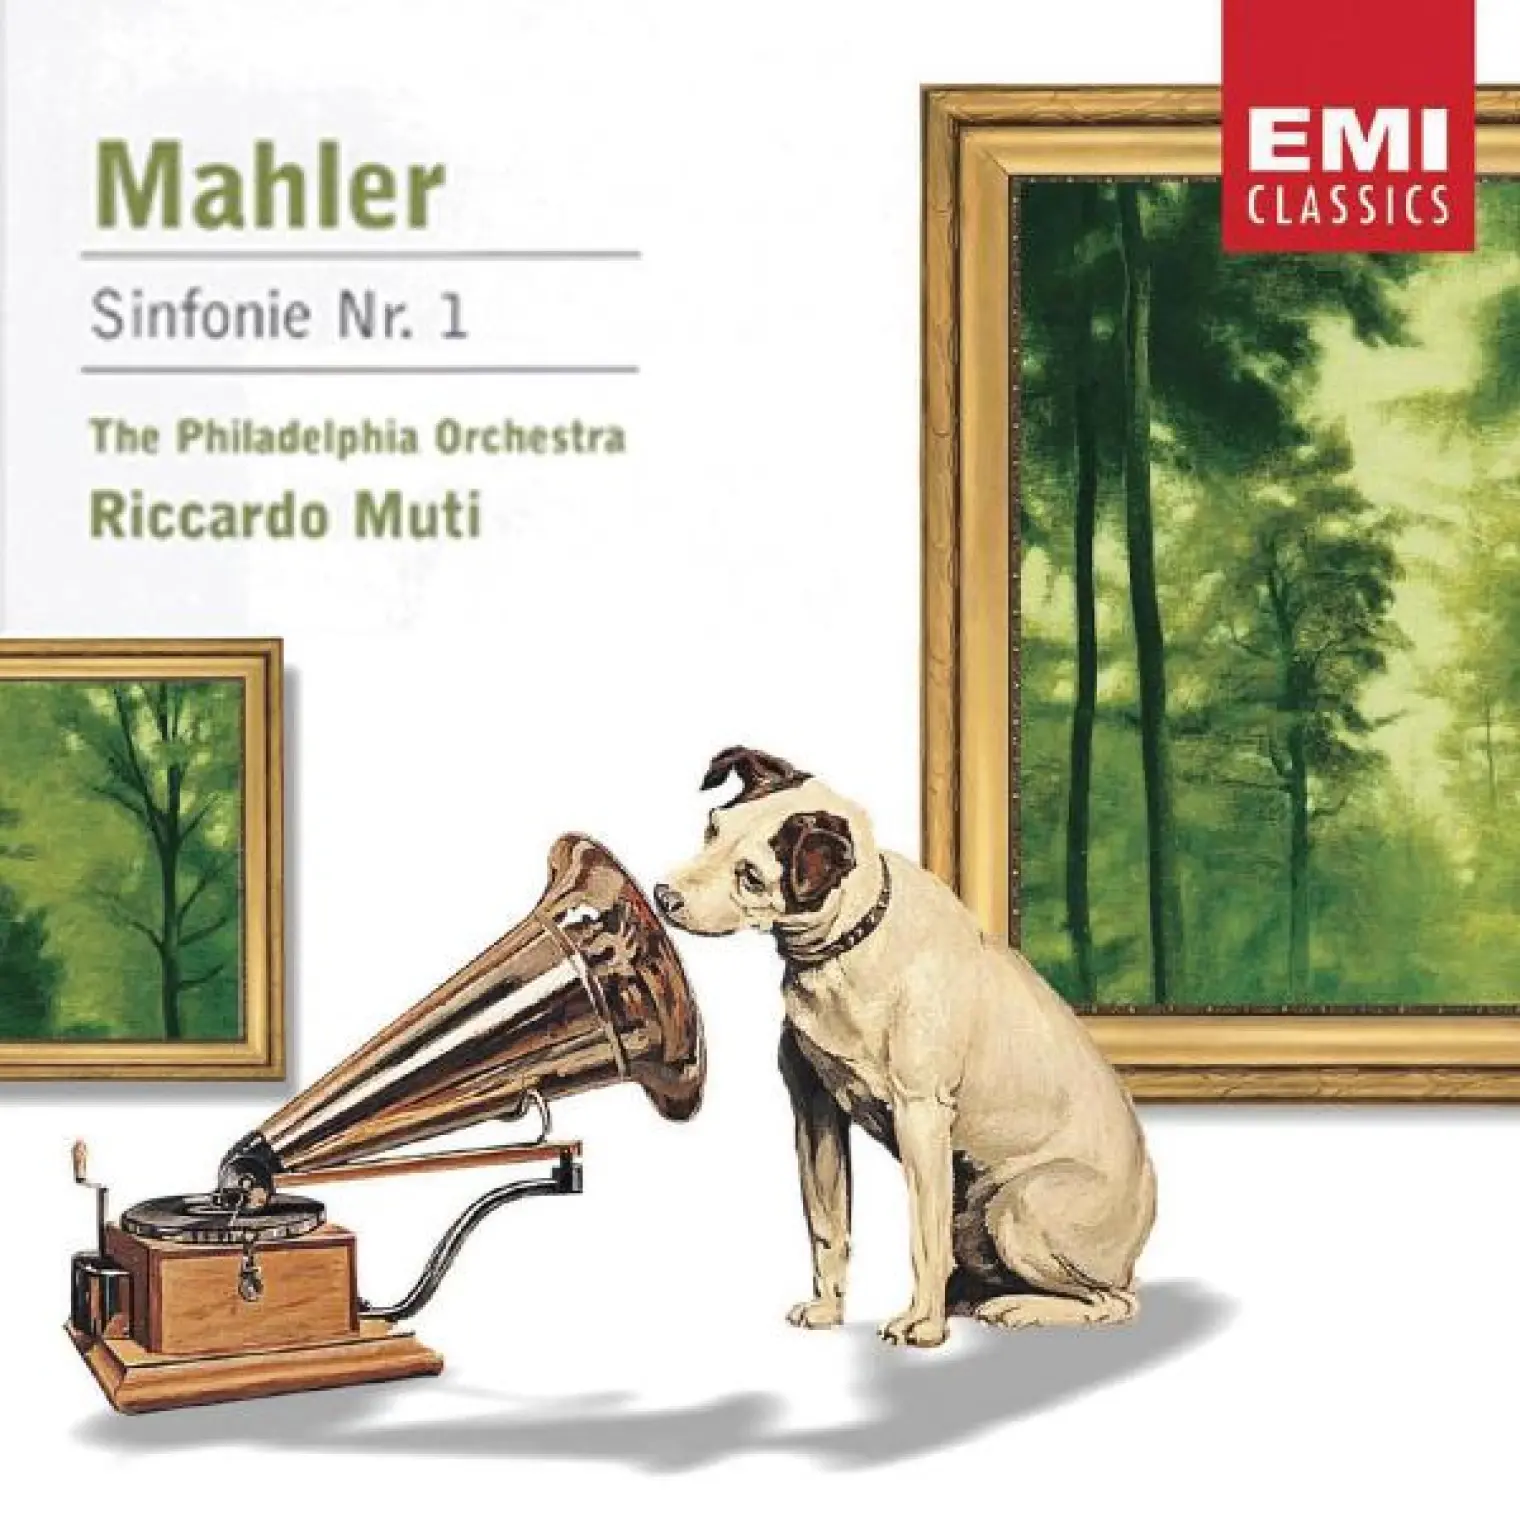 Mahler: Sinfonie Nr. 1 "Titan" -  Philadelphia Orchestra 